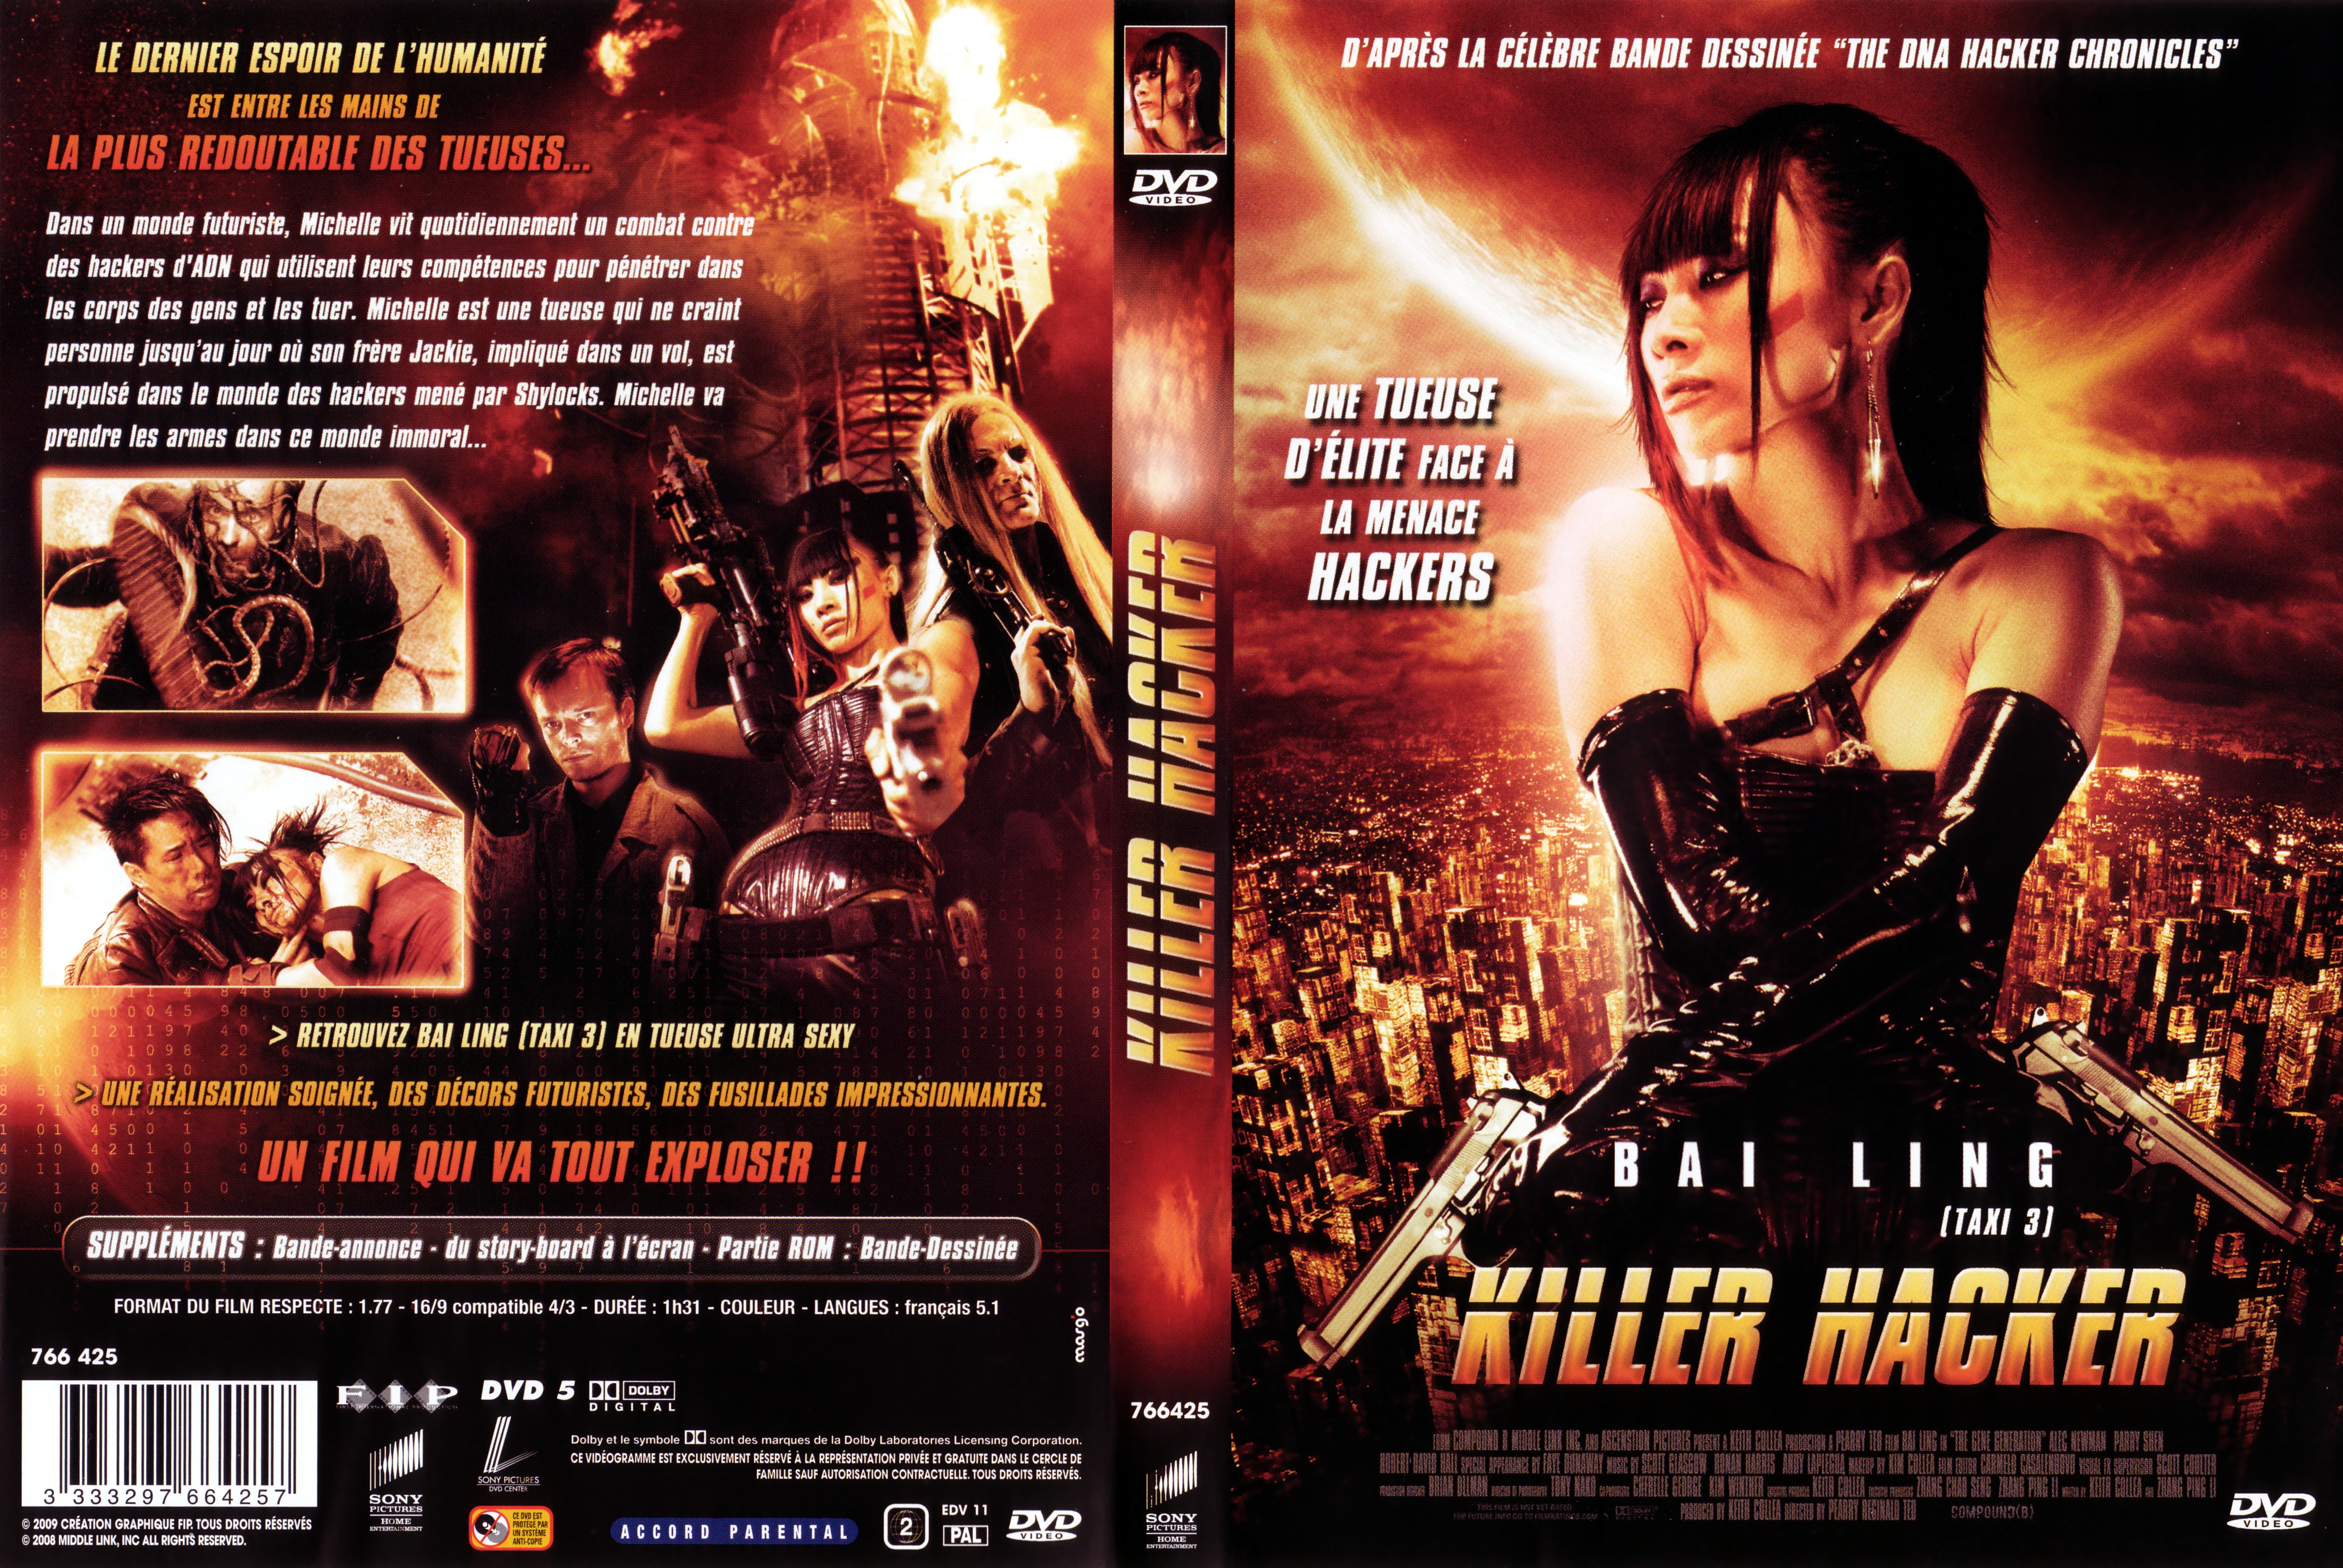 Jaquette DVD Killer hacker